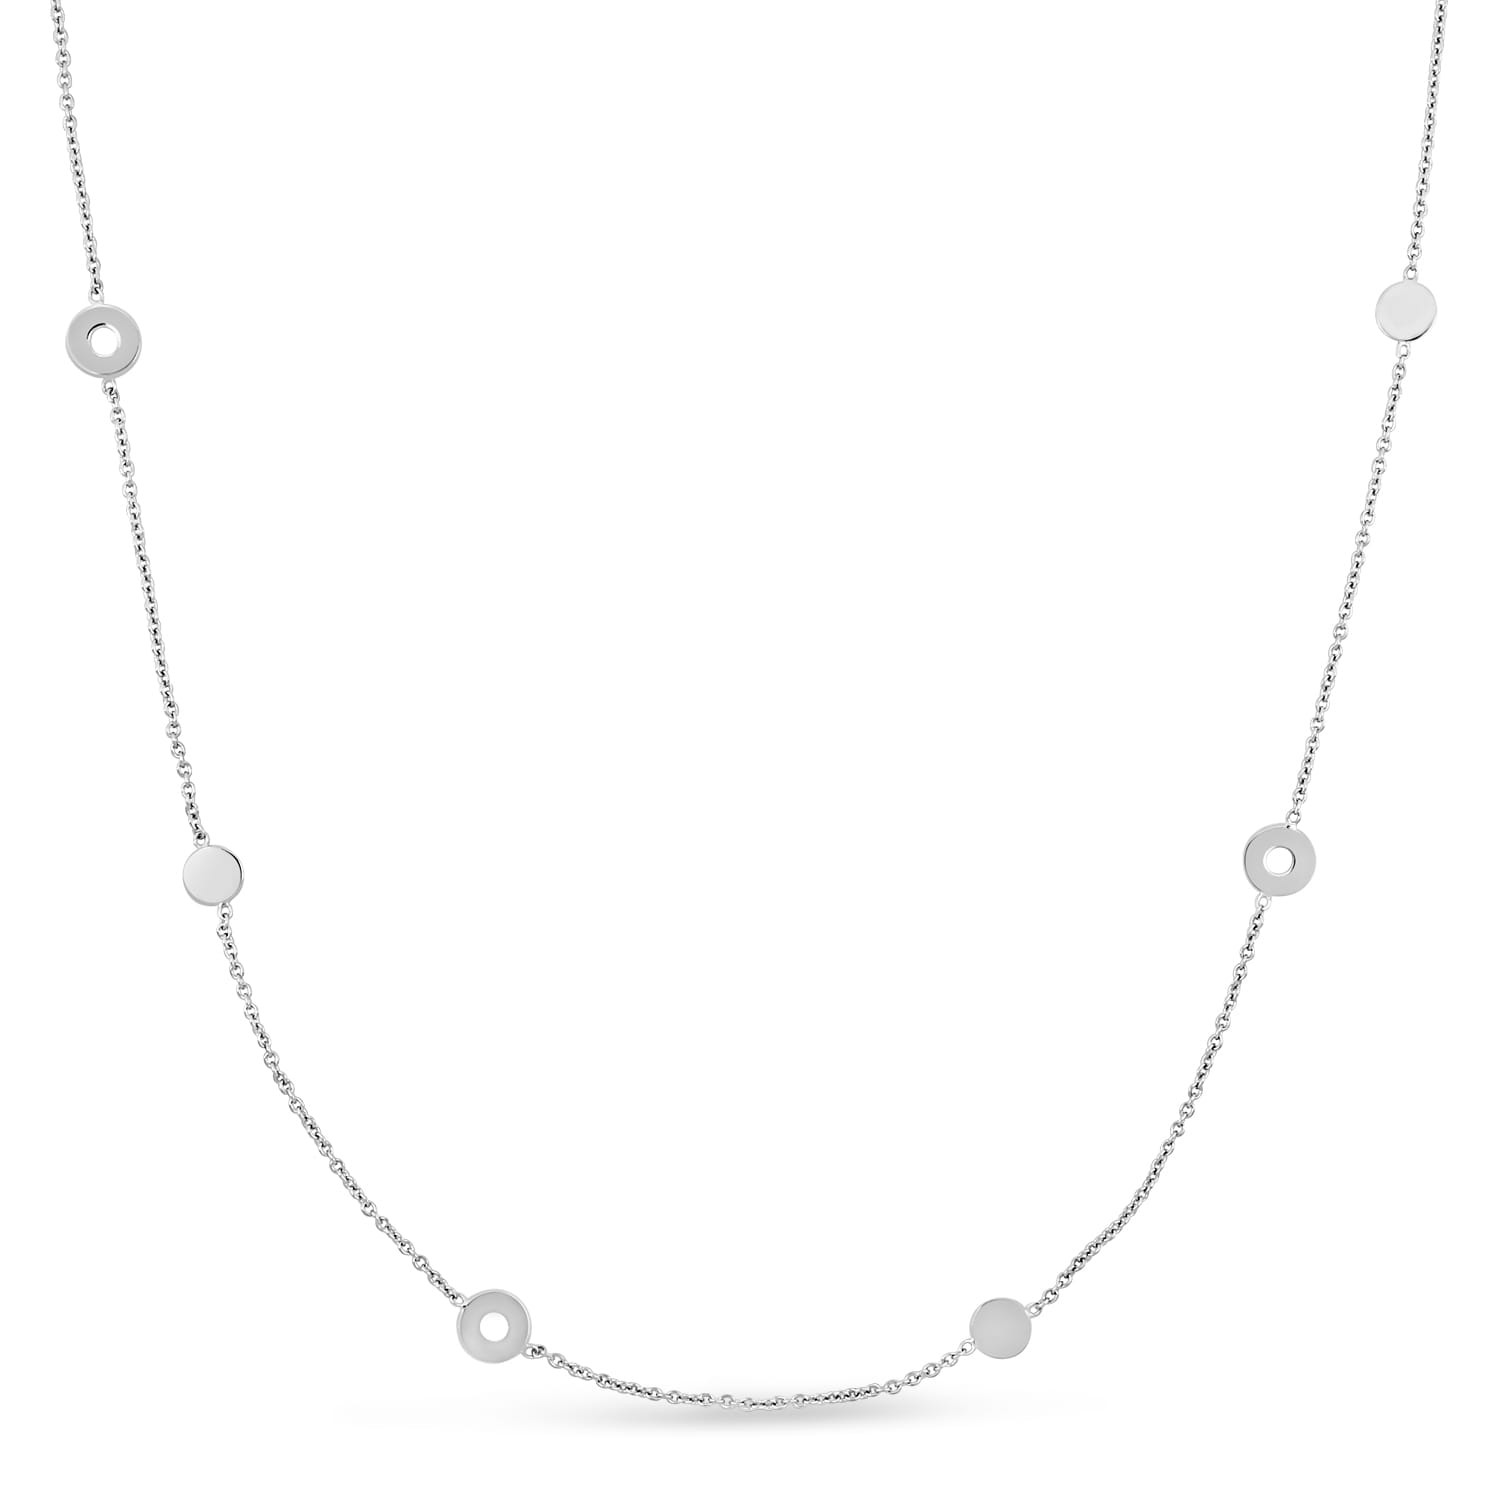 Fancy Circles Necklace 18k White Gold